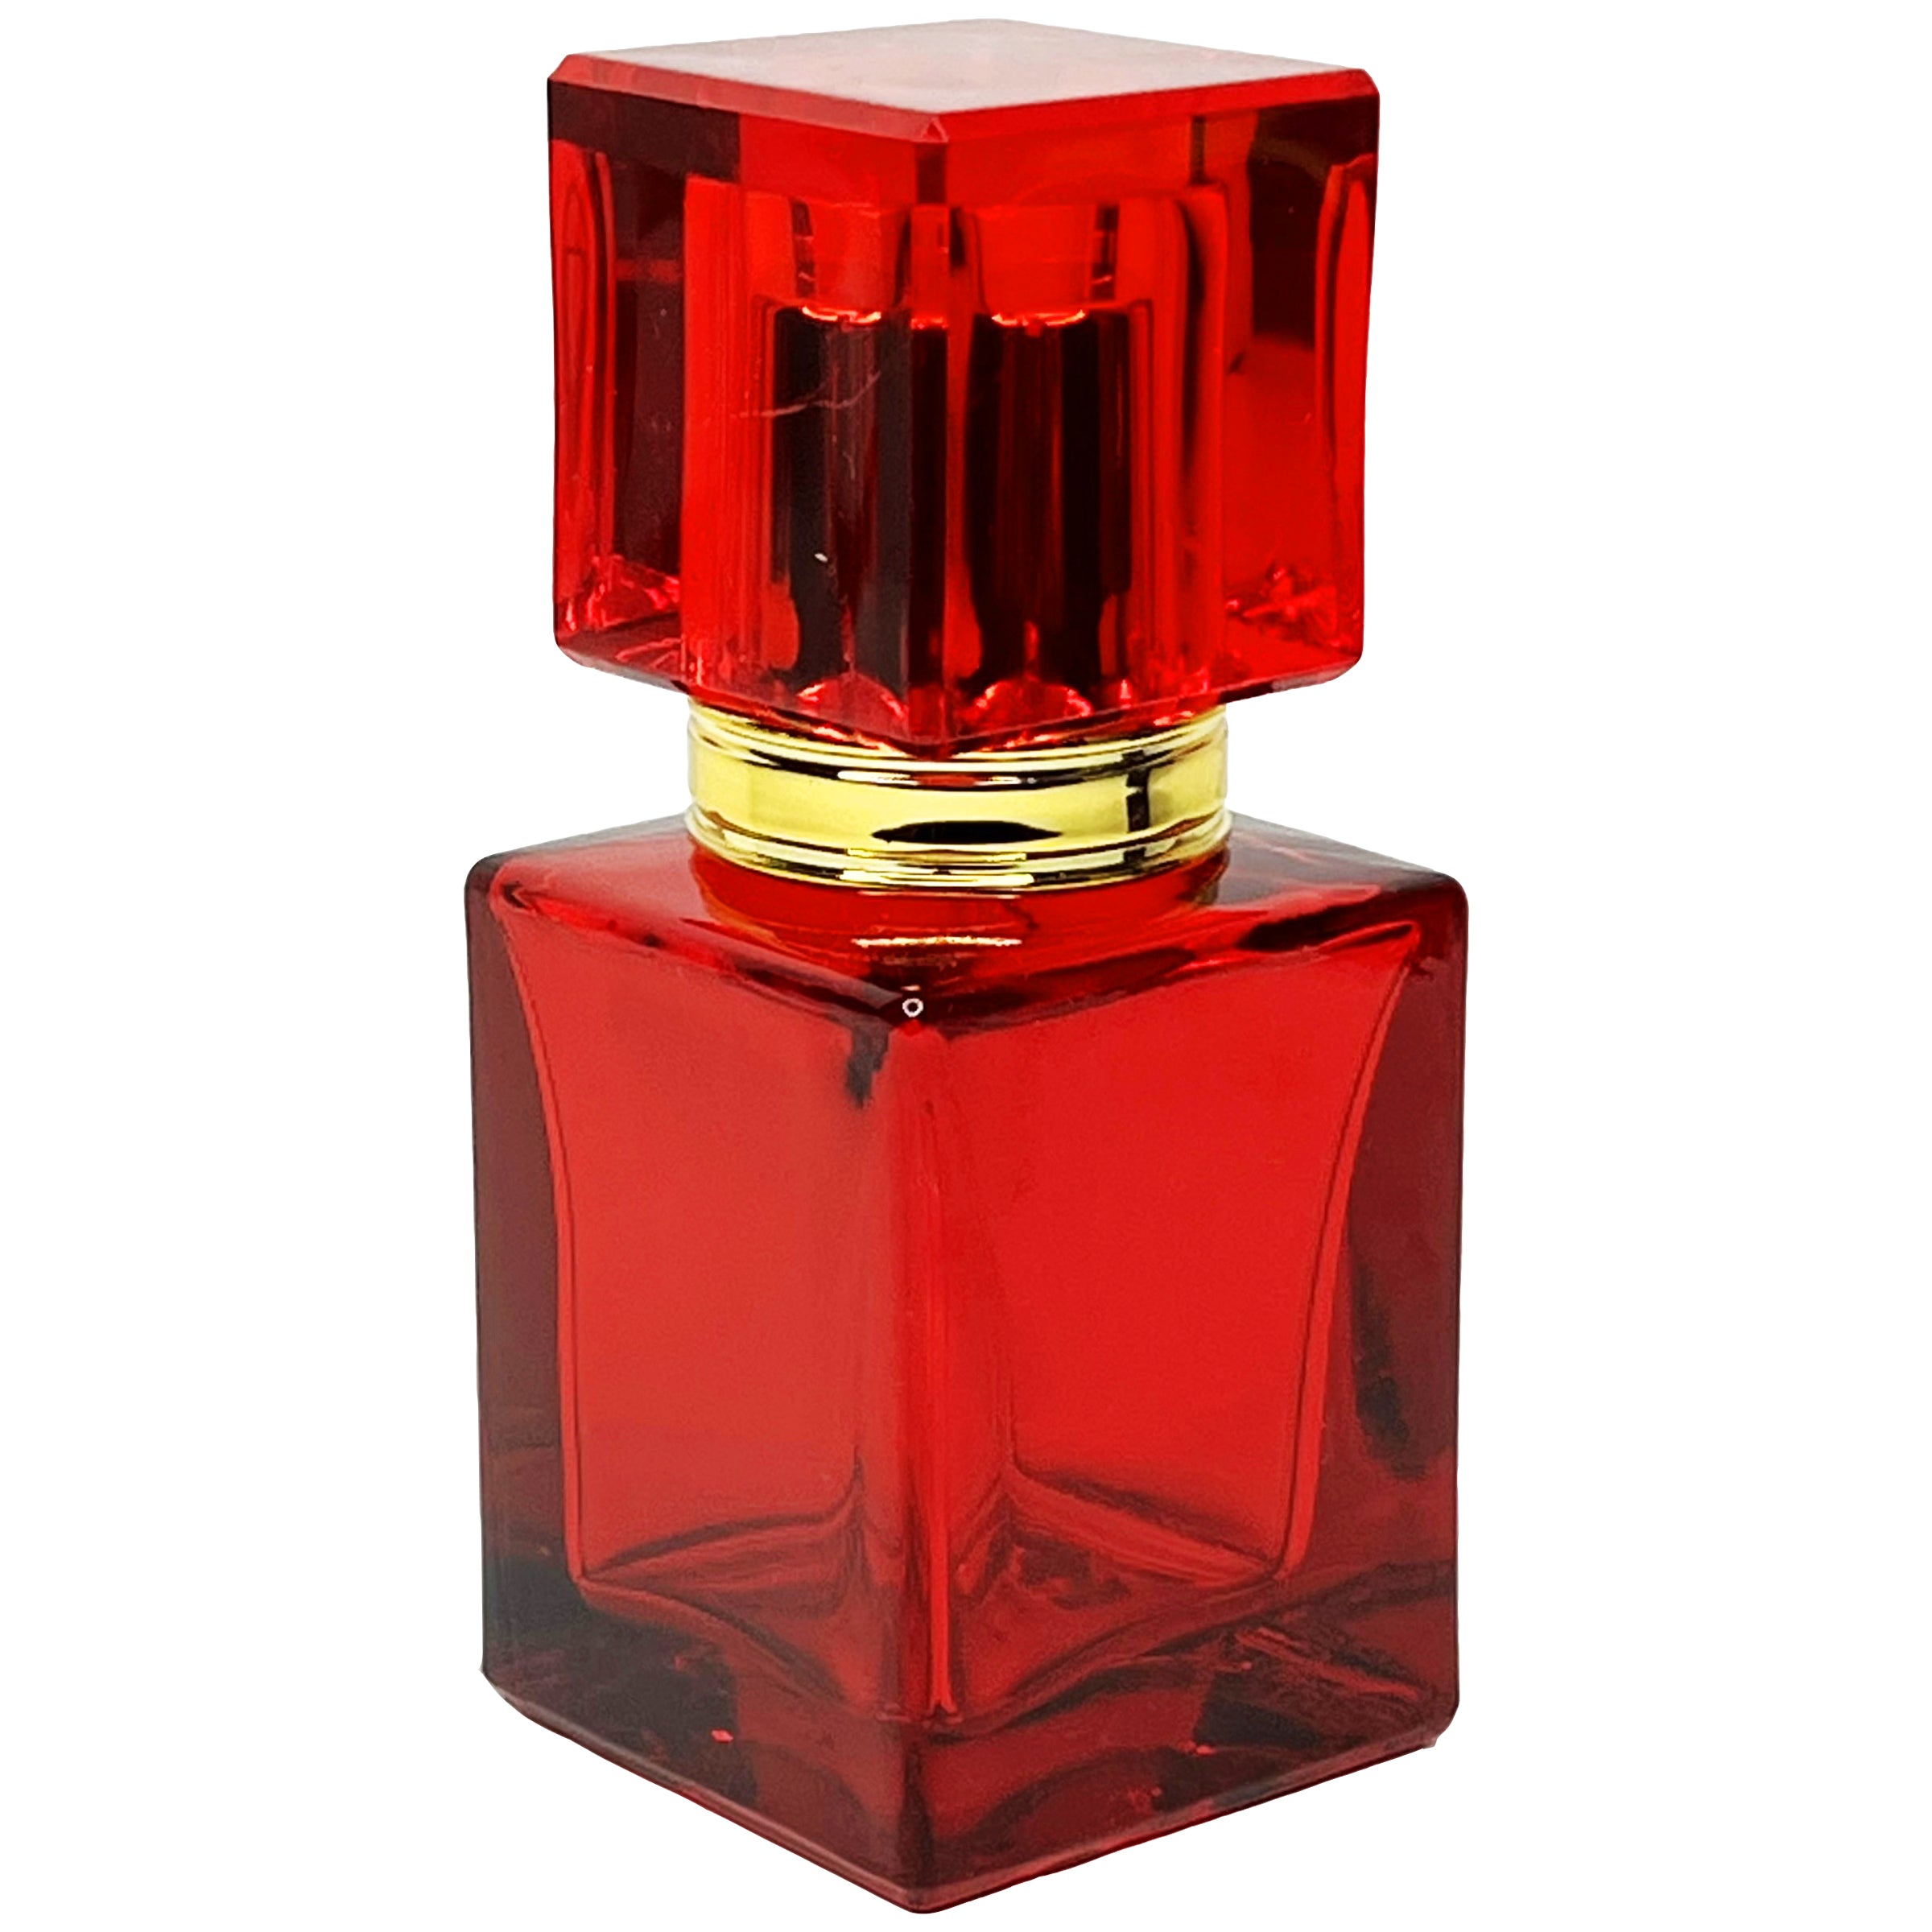 30ml 1oz colored glass cube perfume spray bottles